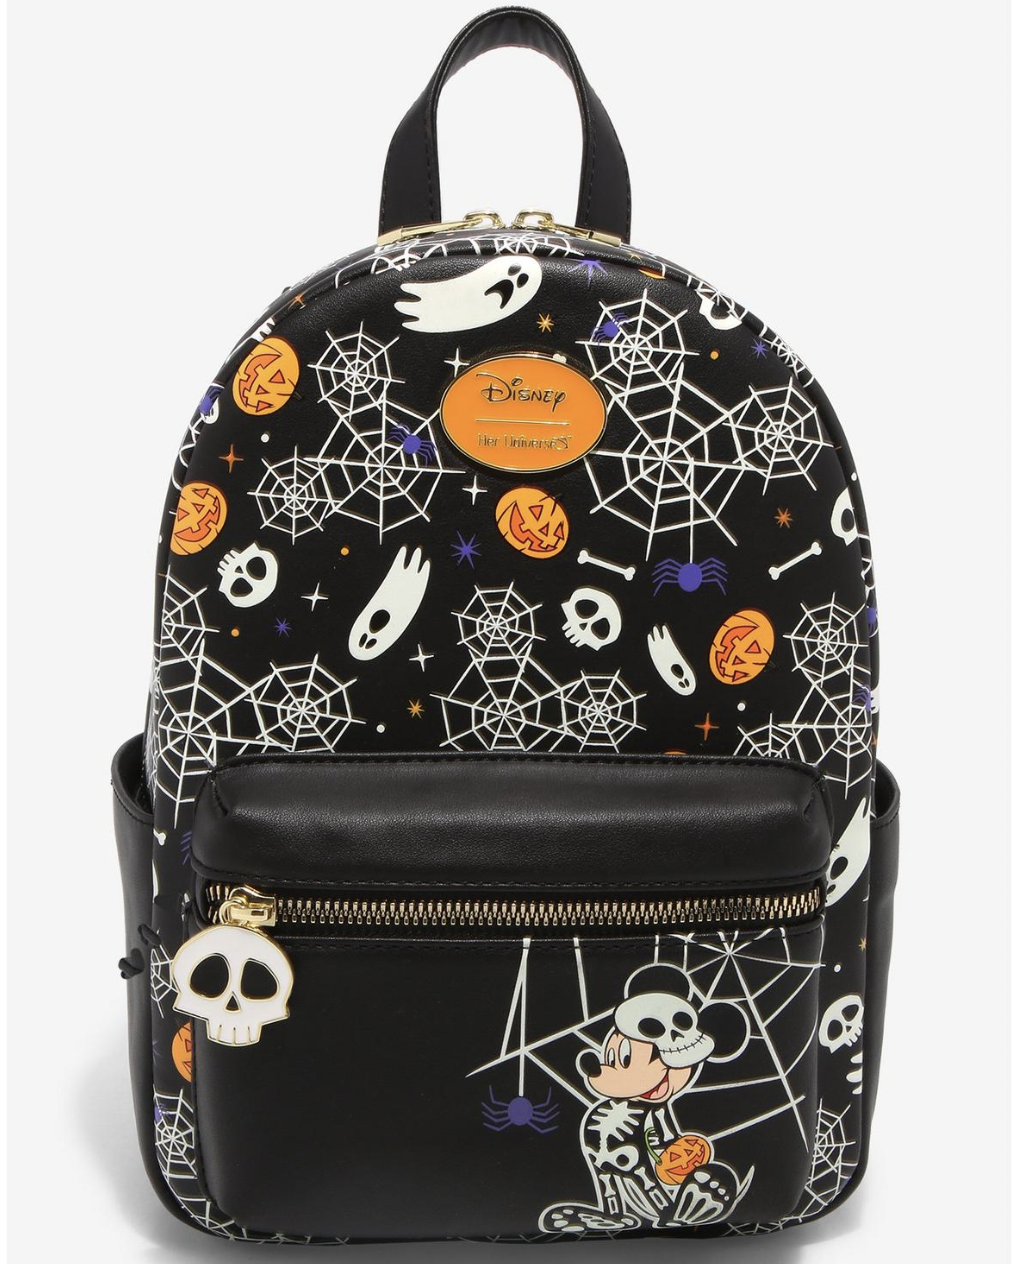 5 Disney Halloween Bags You Need for Spooky Season 🎃 | the disney food blog